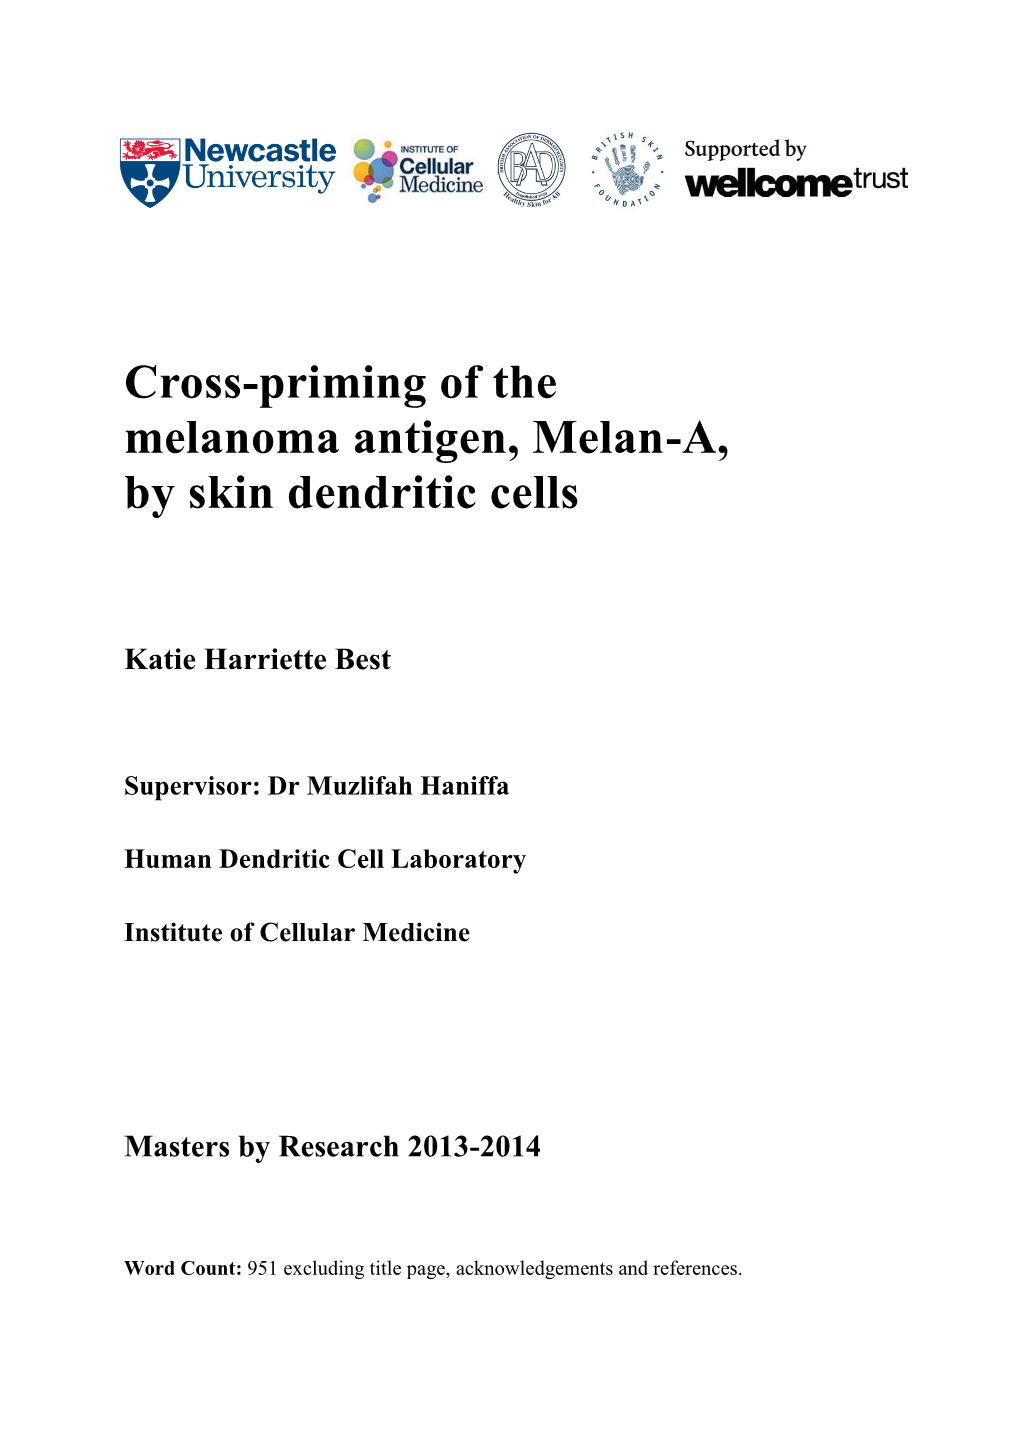 Cross-Priming of the Melanoma Antigen, Melan-A, by Skin Dendritic Cells